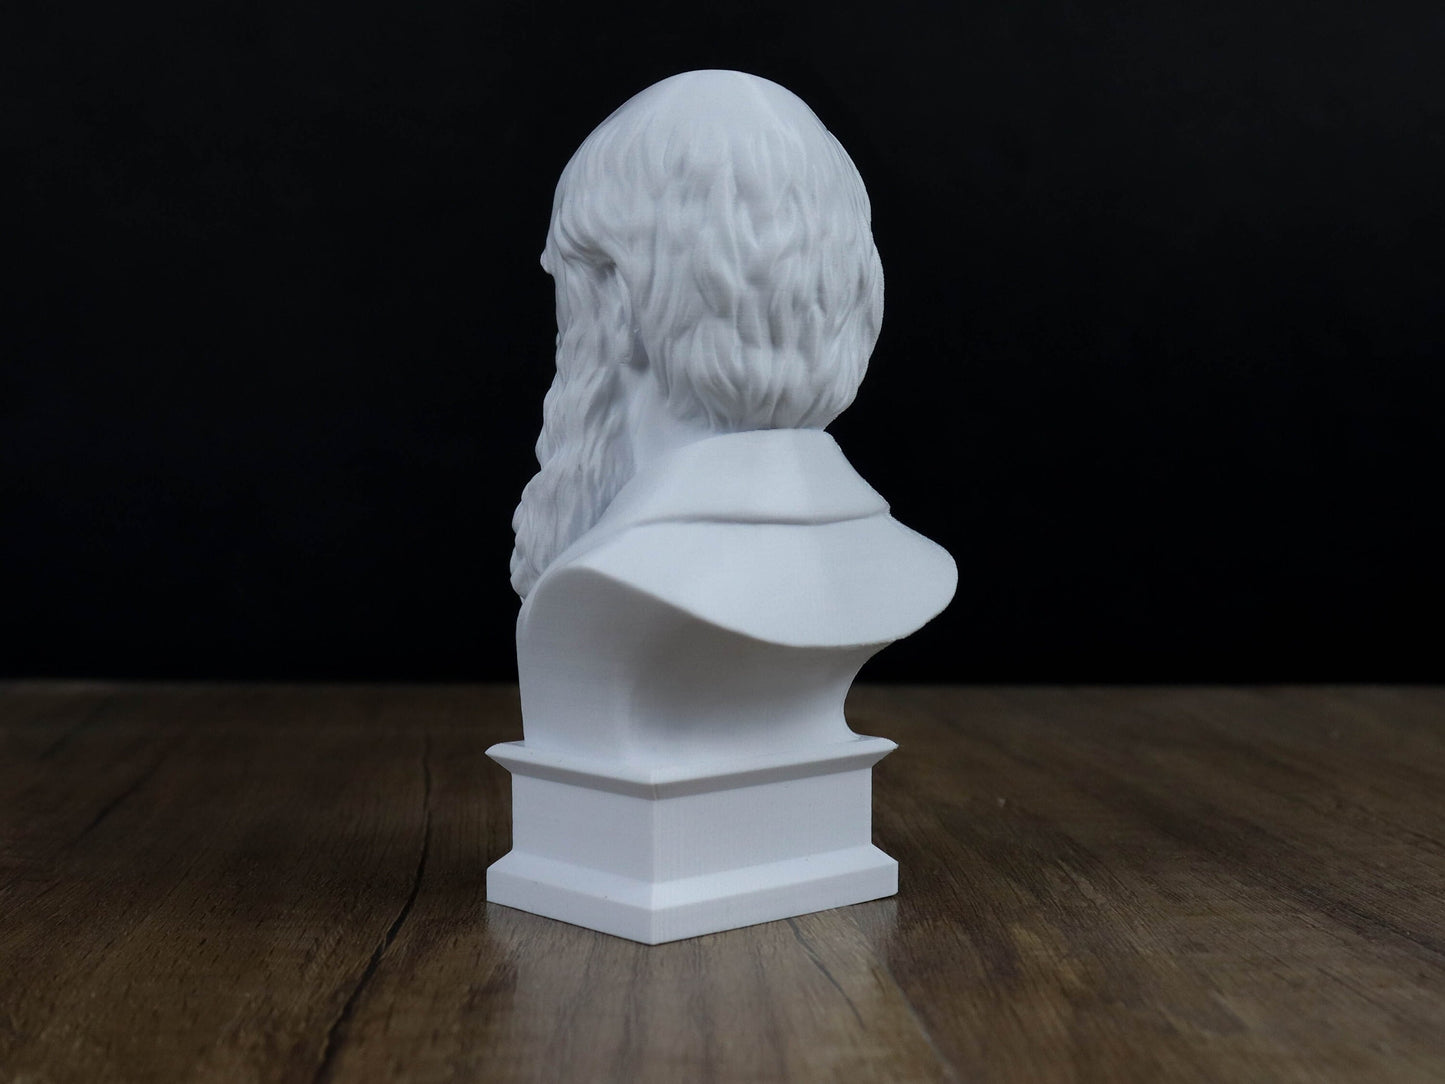 Charles Darwin Bust Sculpture